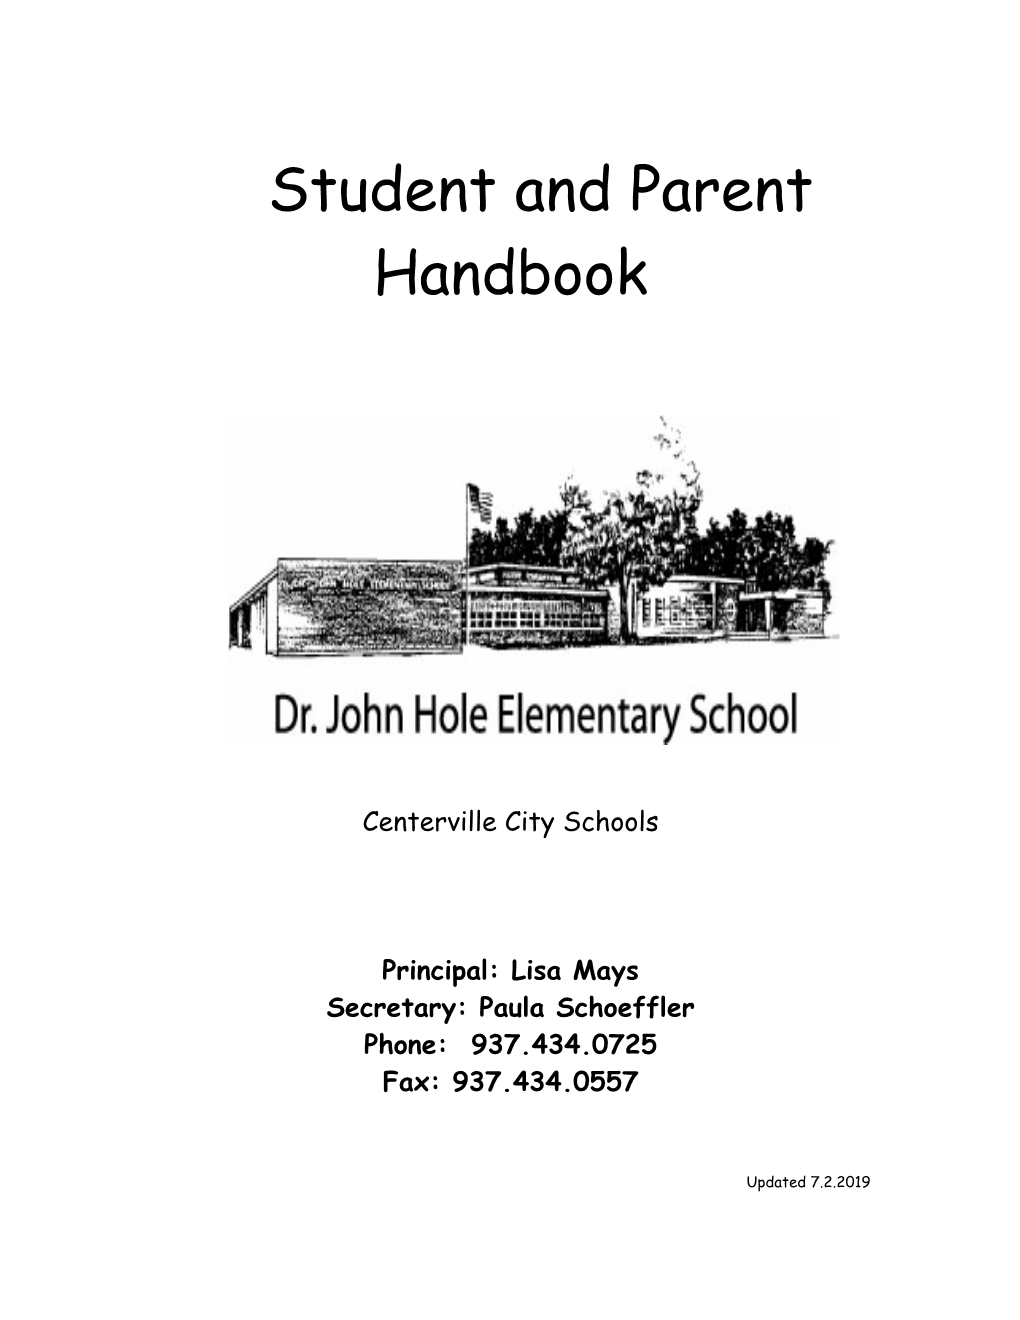 Student and Parent Handbook